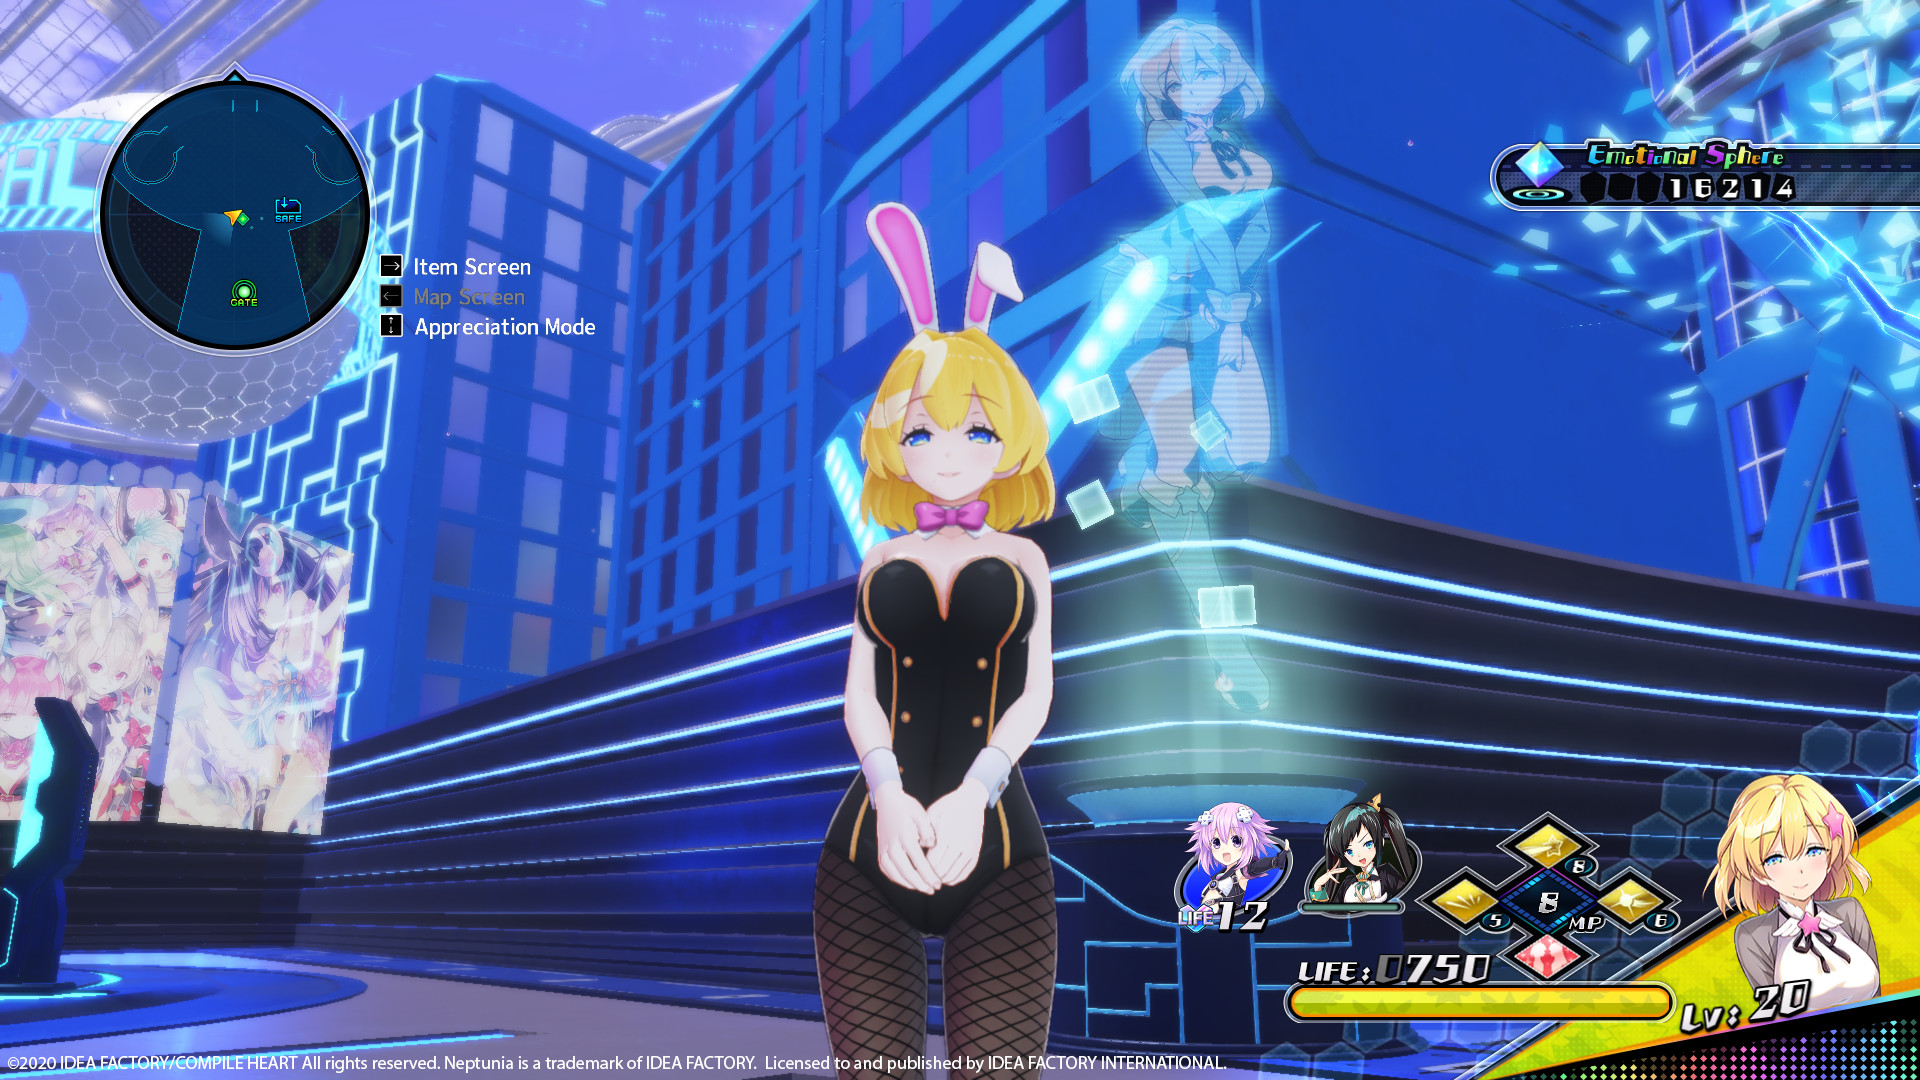 Neptunia Virtual Stars - Bunny Outfit: V-Idol Set DLC Steam CD Key